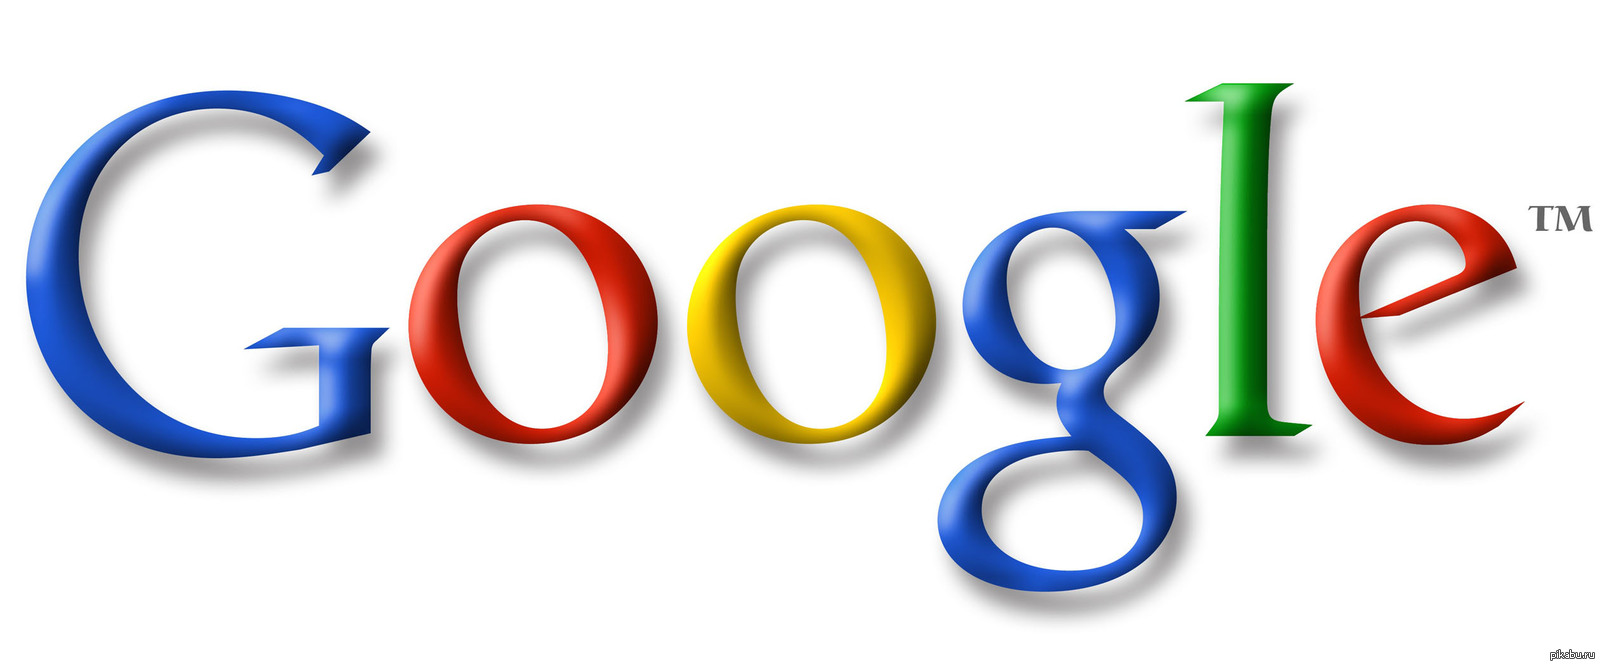 Https blog google. Гугл. Гугл лого. Логотипы поисковых систем. Гугл Академия логотип.